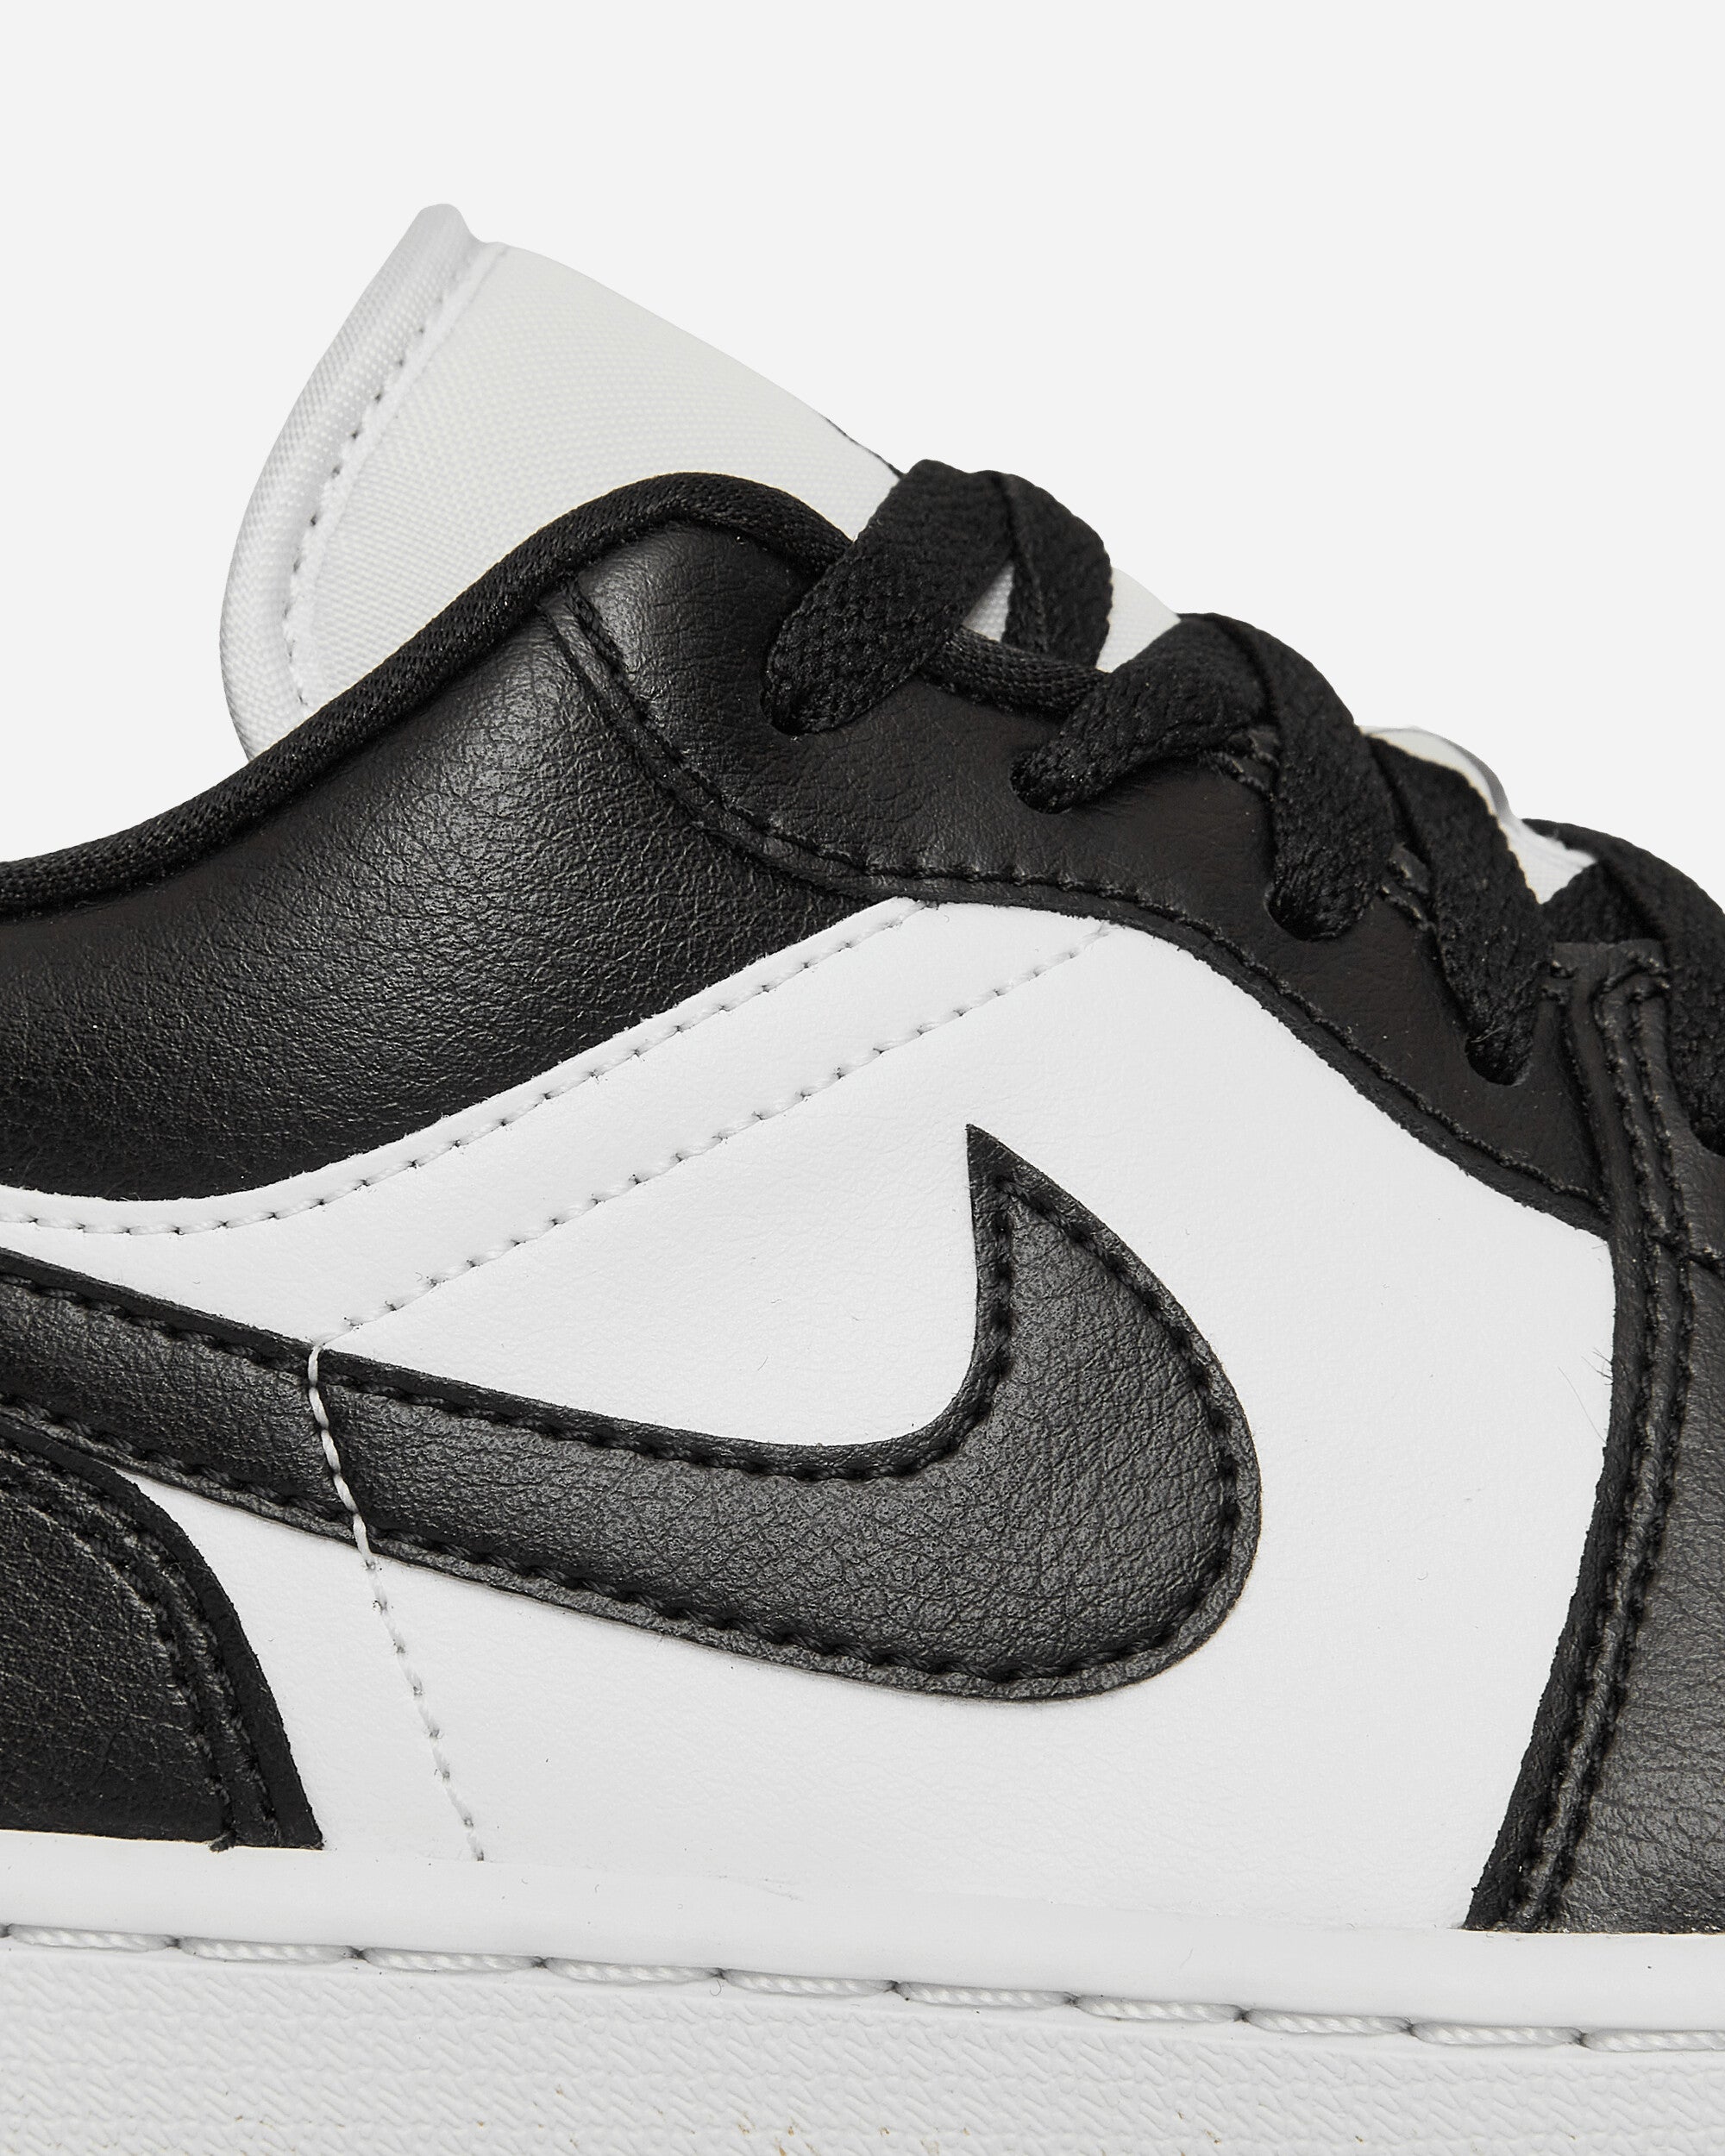 Nike Jordan Wmns Air Jordan 1 Low White/Black Sneakers Low DC0774-101